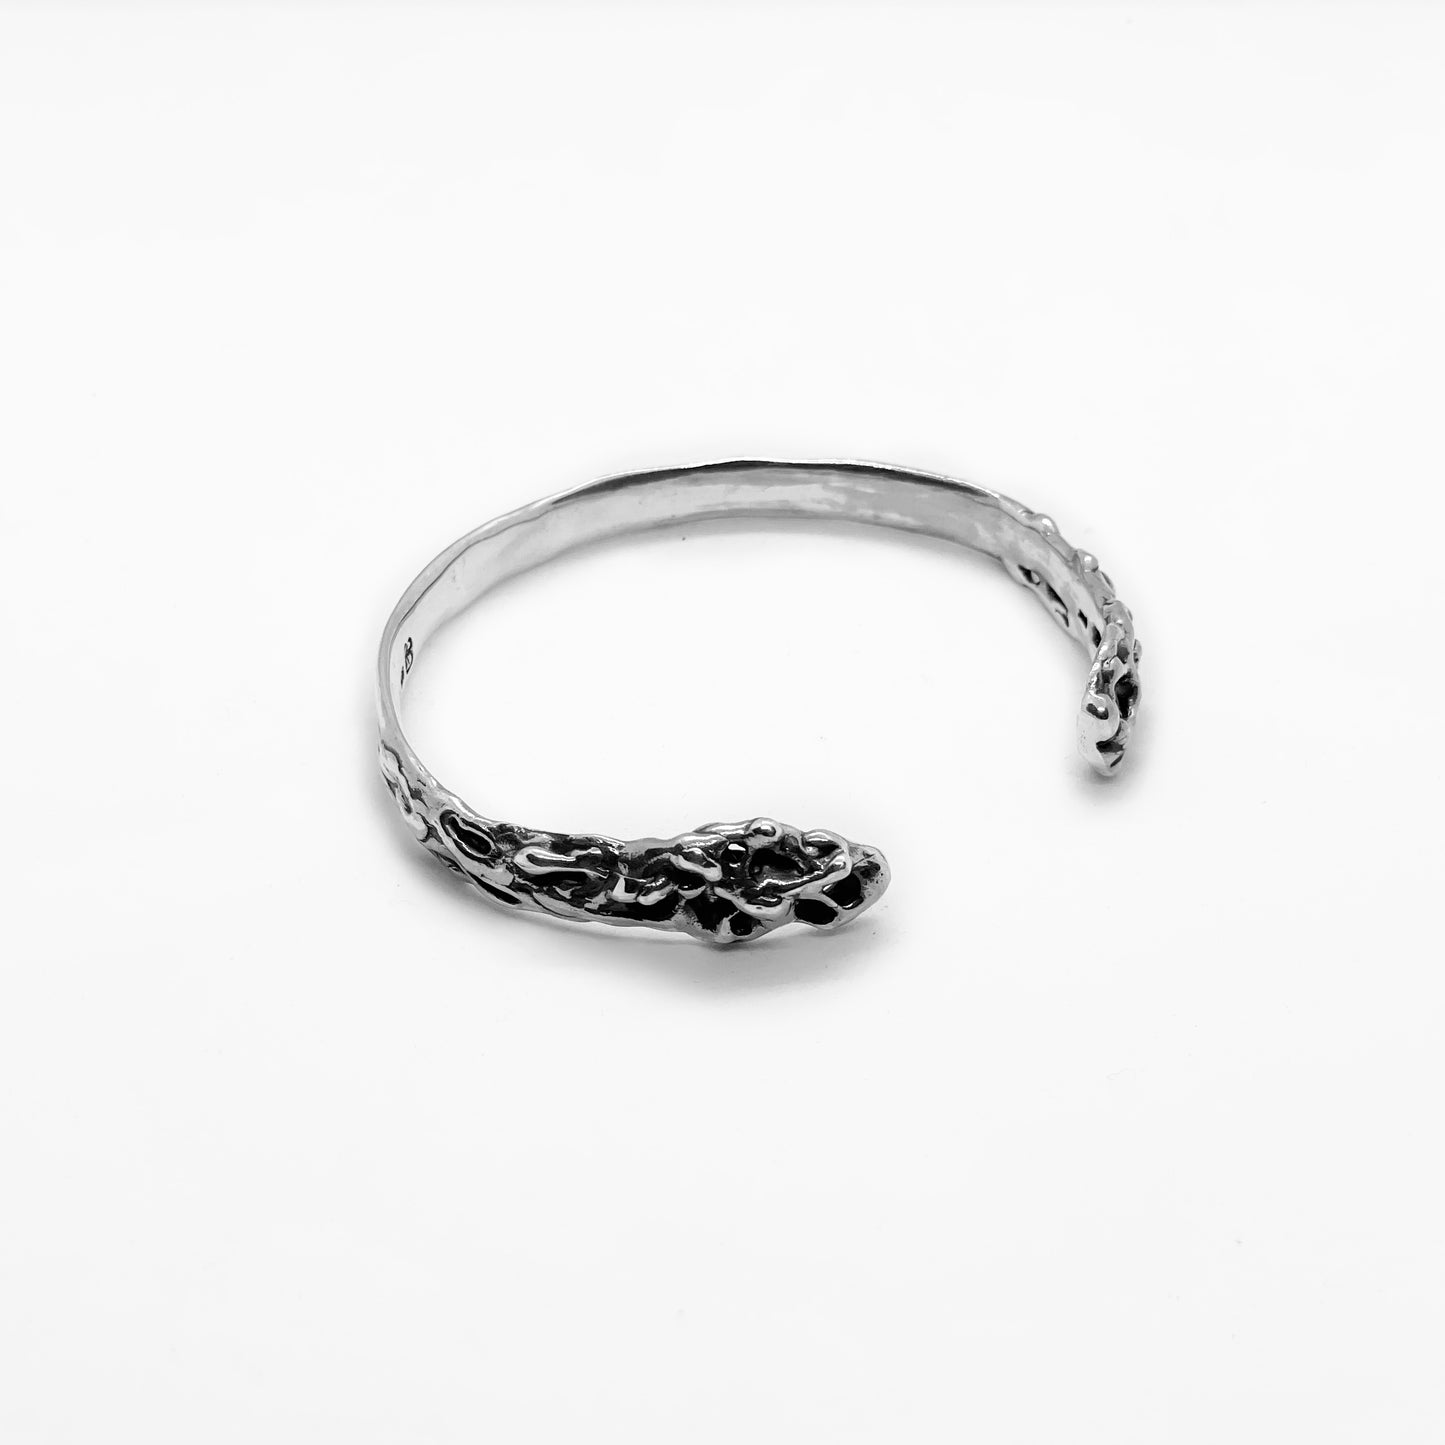 
                  
                    Spiritual Cuff Bracelet - Designer Jewelry - Statement Cuff Bracelet - Sterling Silver Cuff Bracelet - Free Form - Kalypso Cuff Bracelet
                  
                